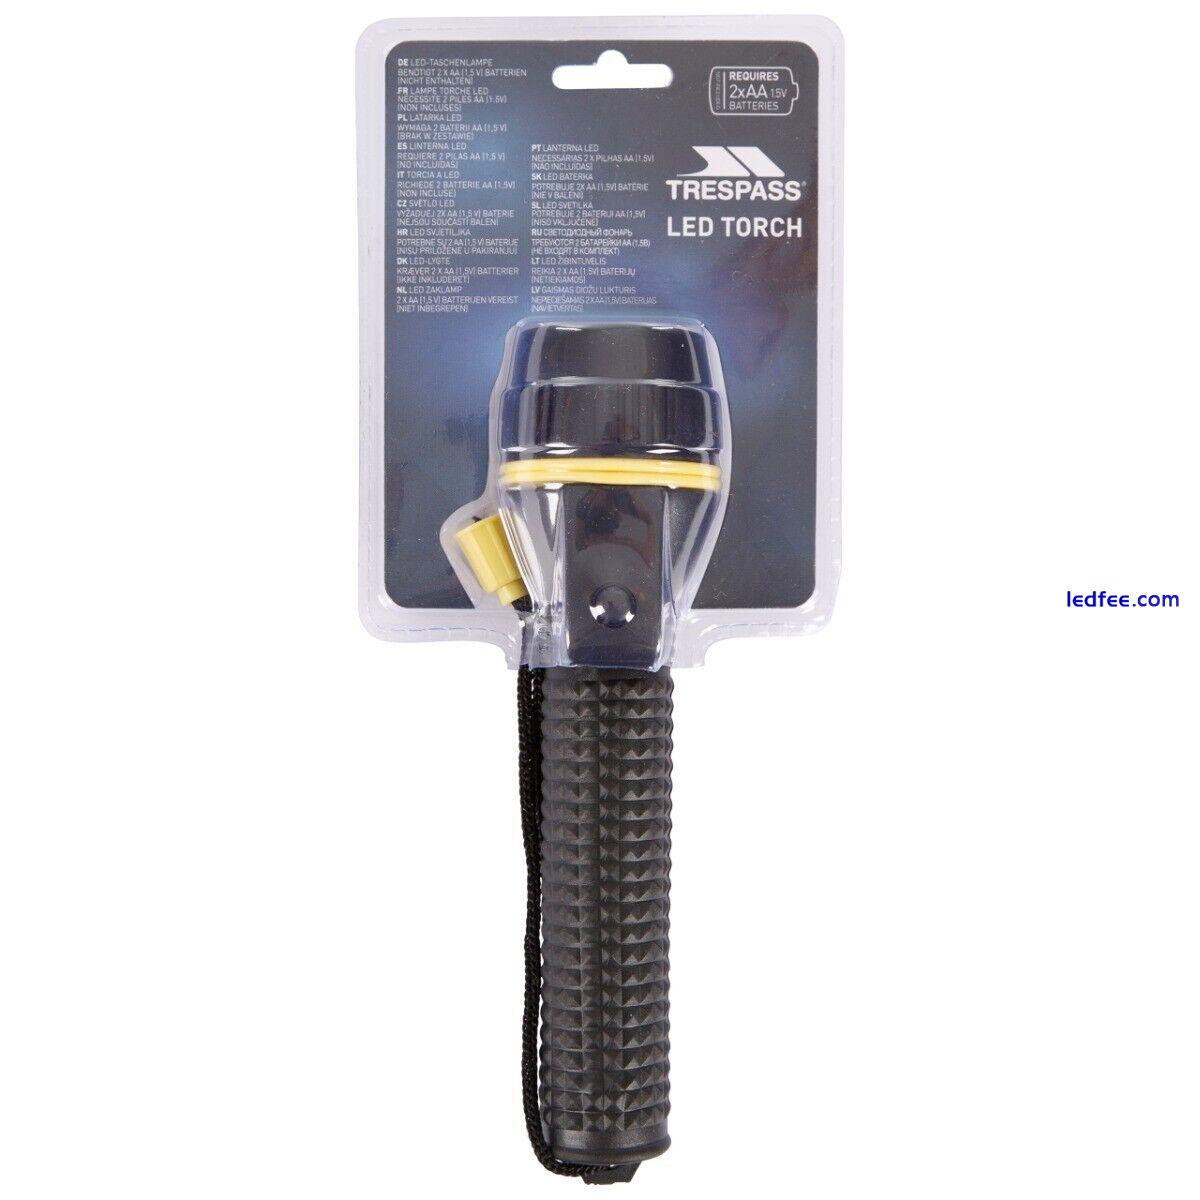 Trespass 3 LED Lightweight Torch Rubber Grip Water Shock Resistant 0 